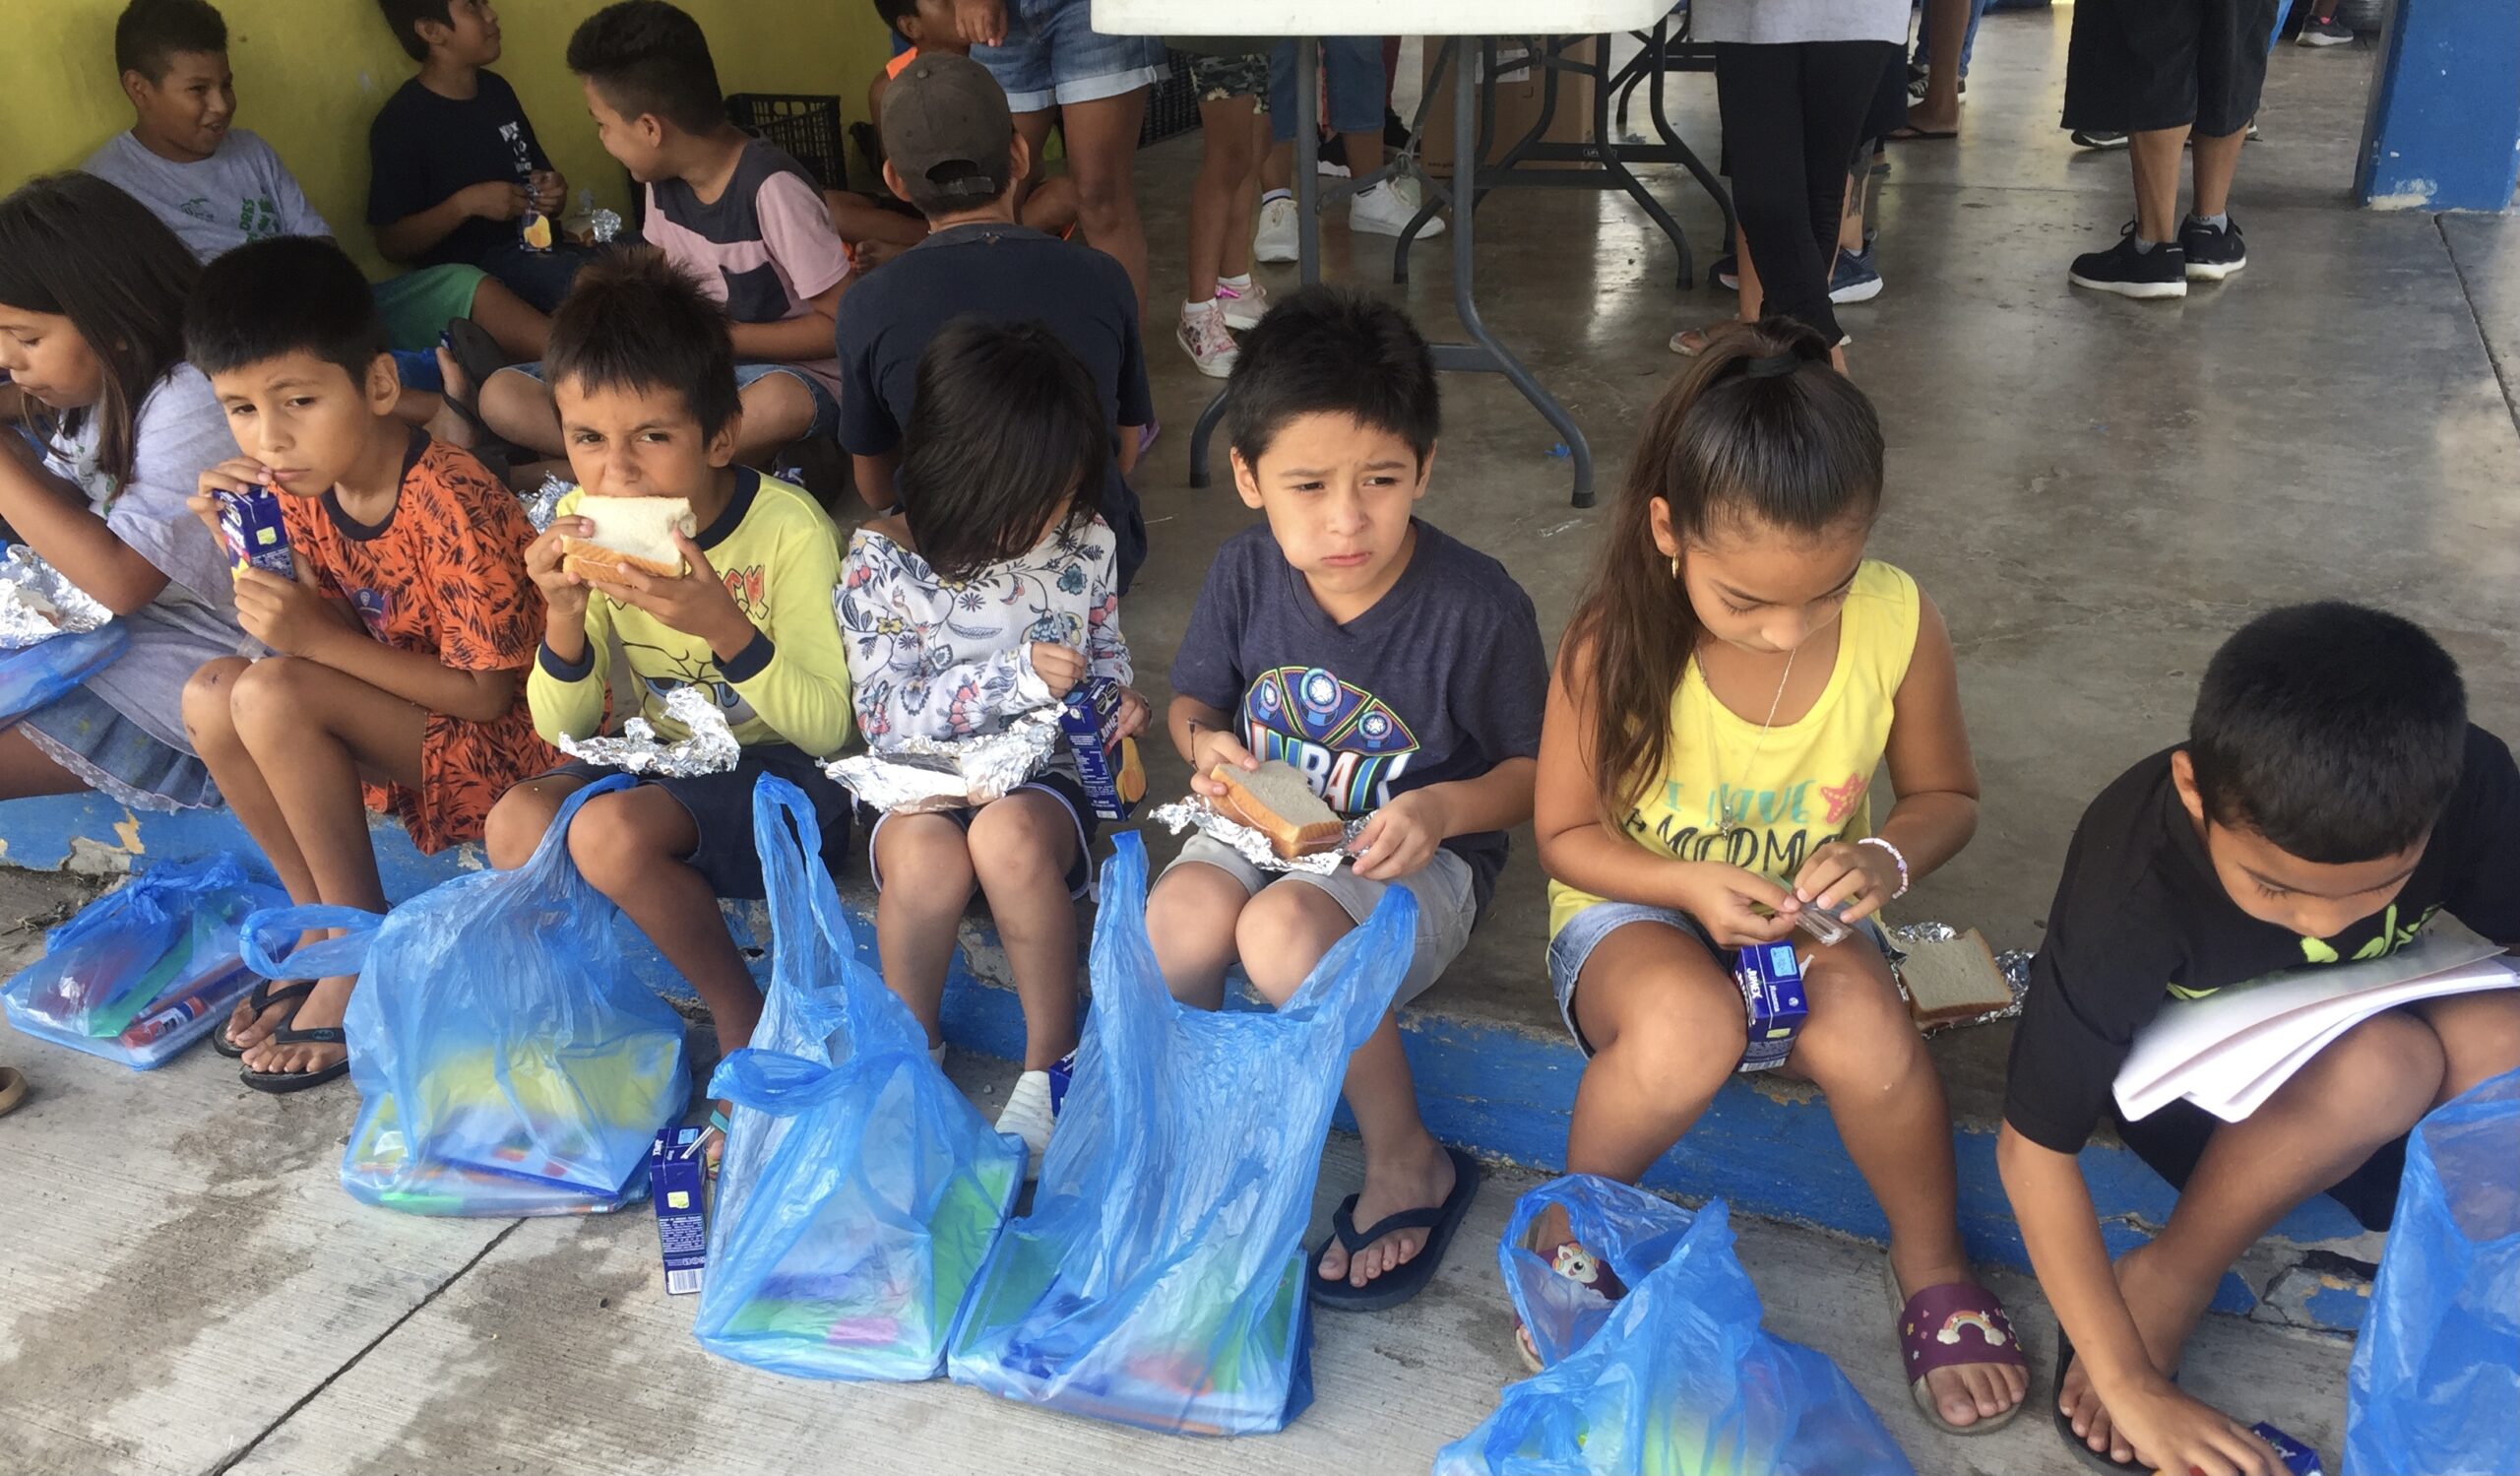 Children with San Diego Charity Unity 4 Orphans' nutrition and ESL program in Punta Mita, Mexico enjoying lunch